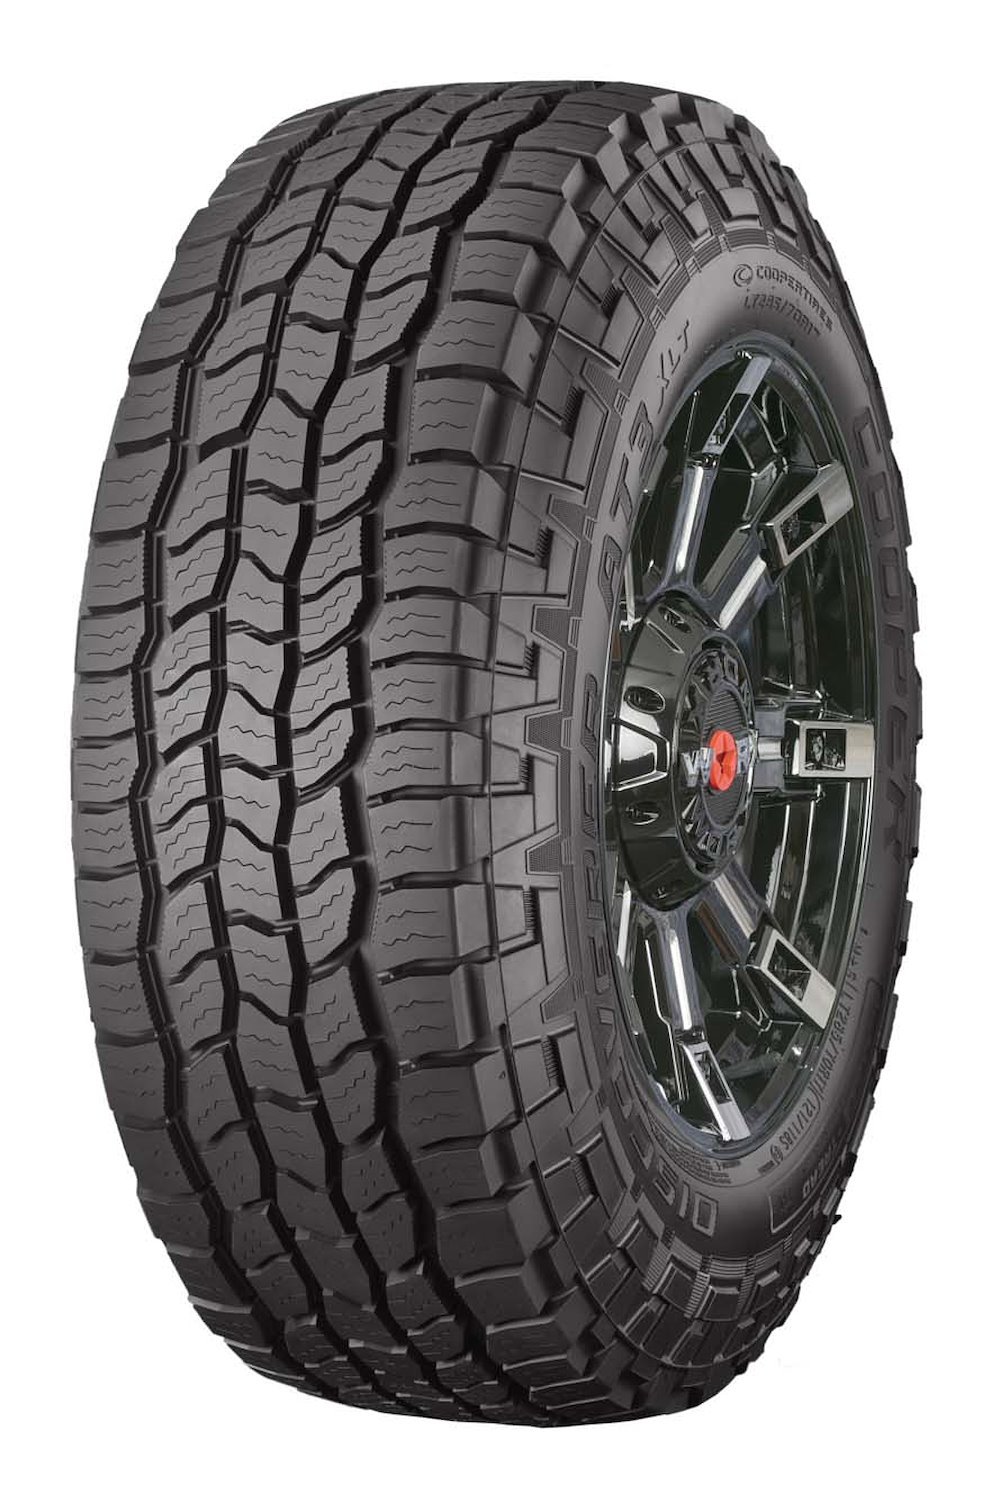 Discoverer AT3 XLT All-Terrain Tire, 35X12.50R18LT